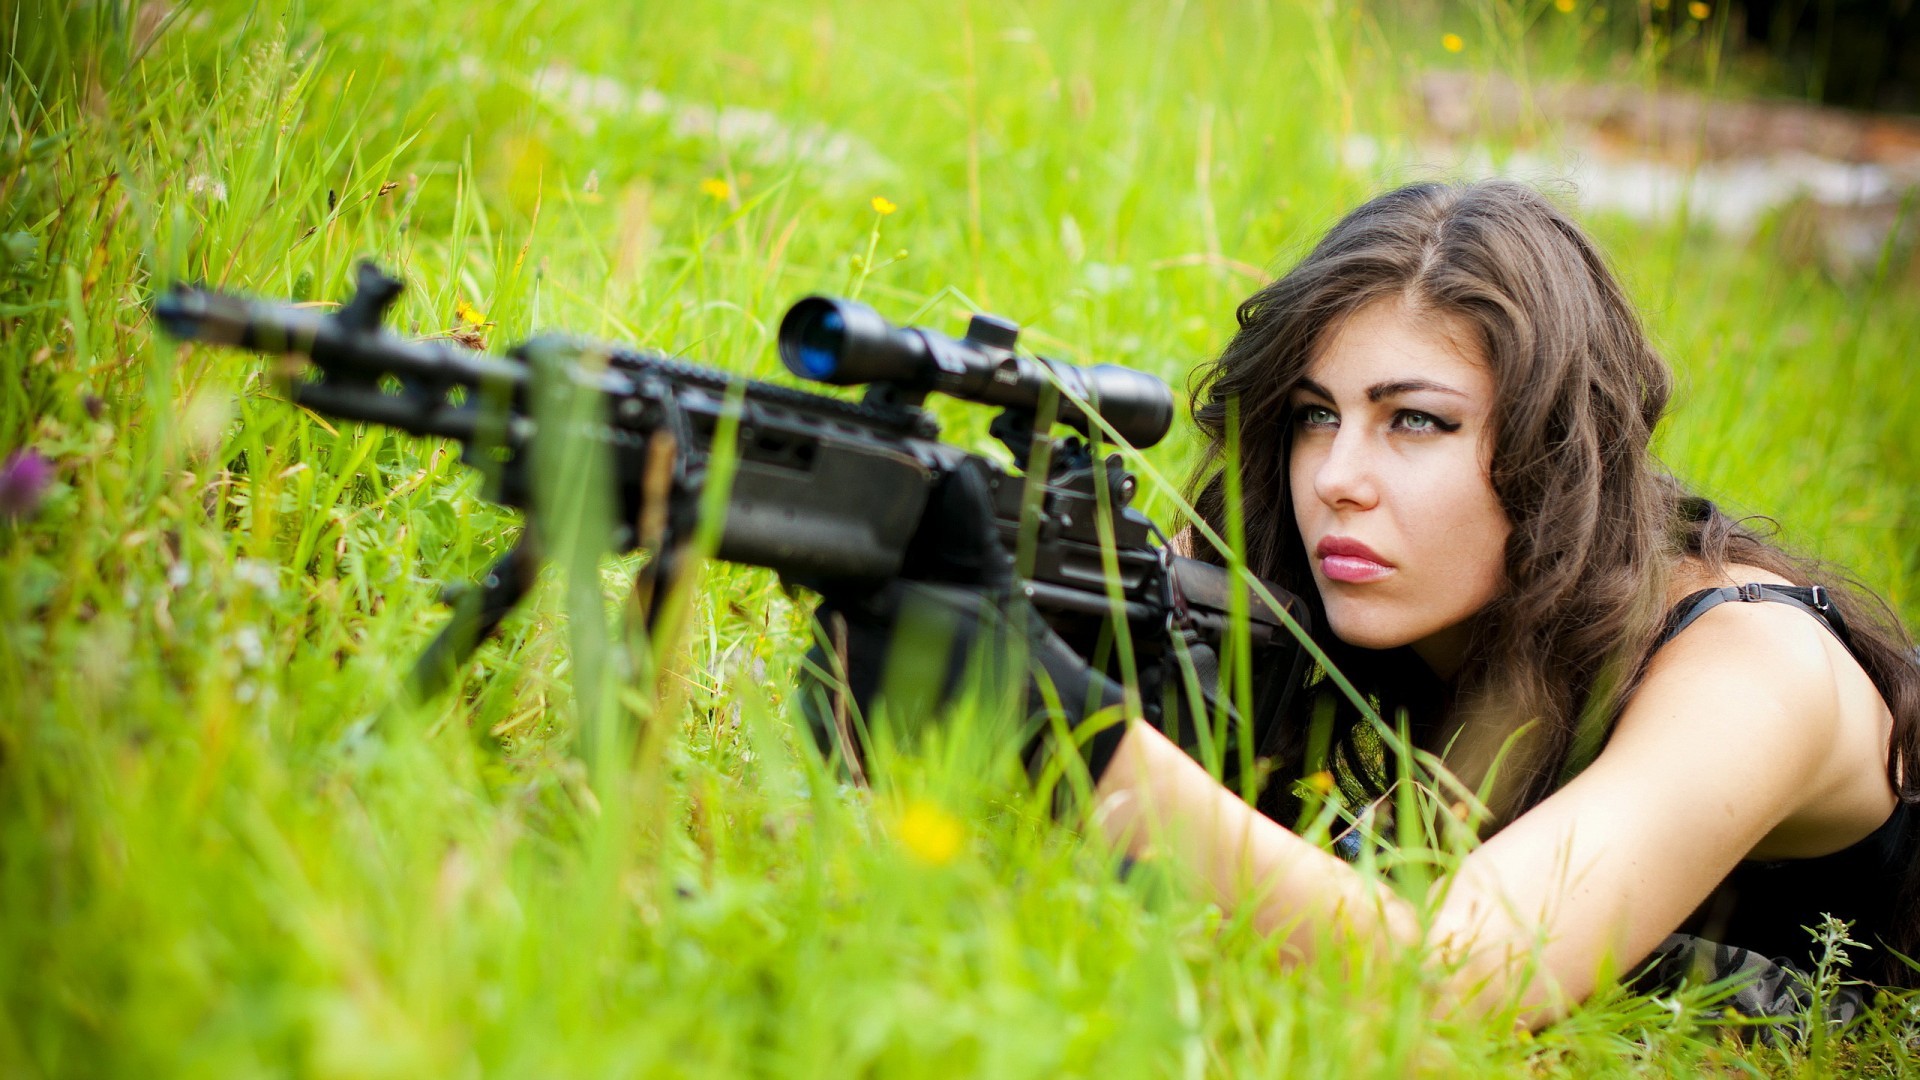 People 1920x1080 M14 EBR scopes aiming female soldier brunette lying down long hair women girls with guns women outdoors lipstick grass outdoors rifles weapon